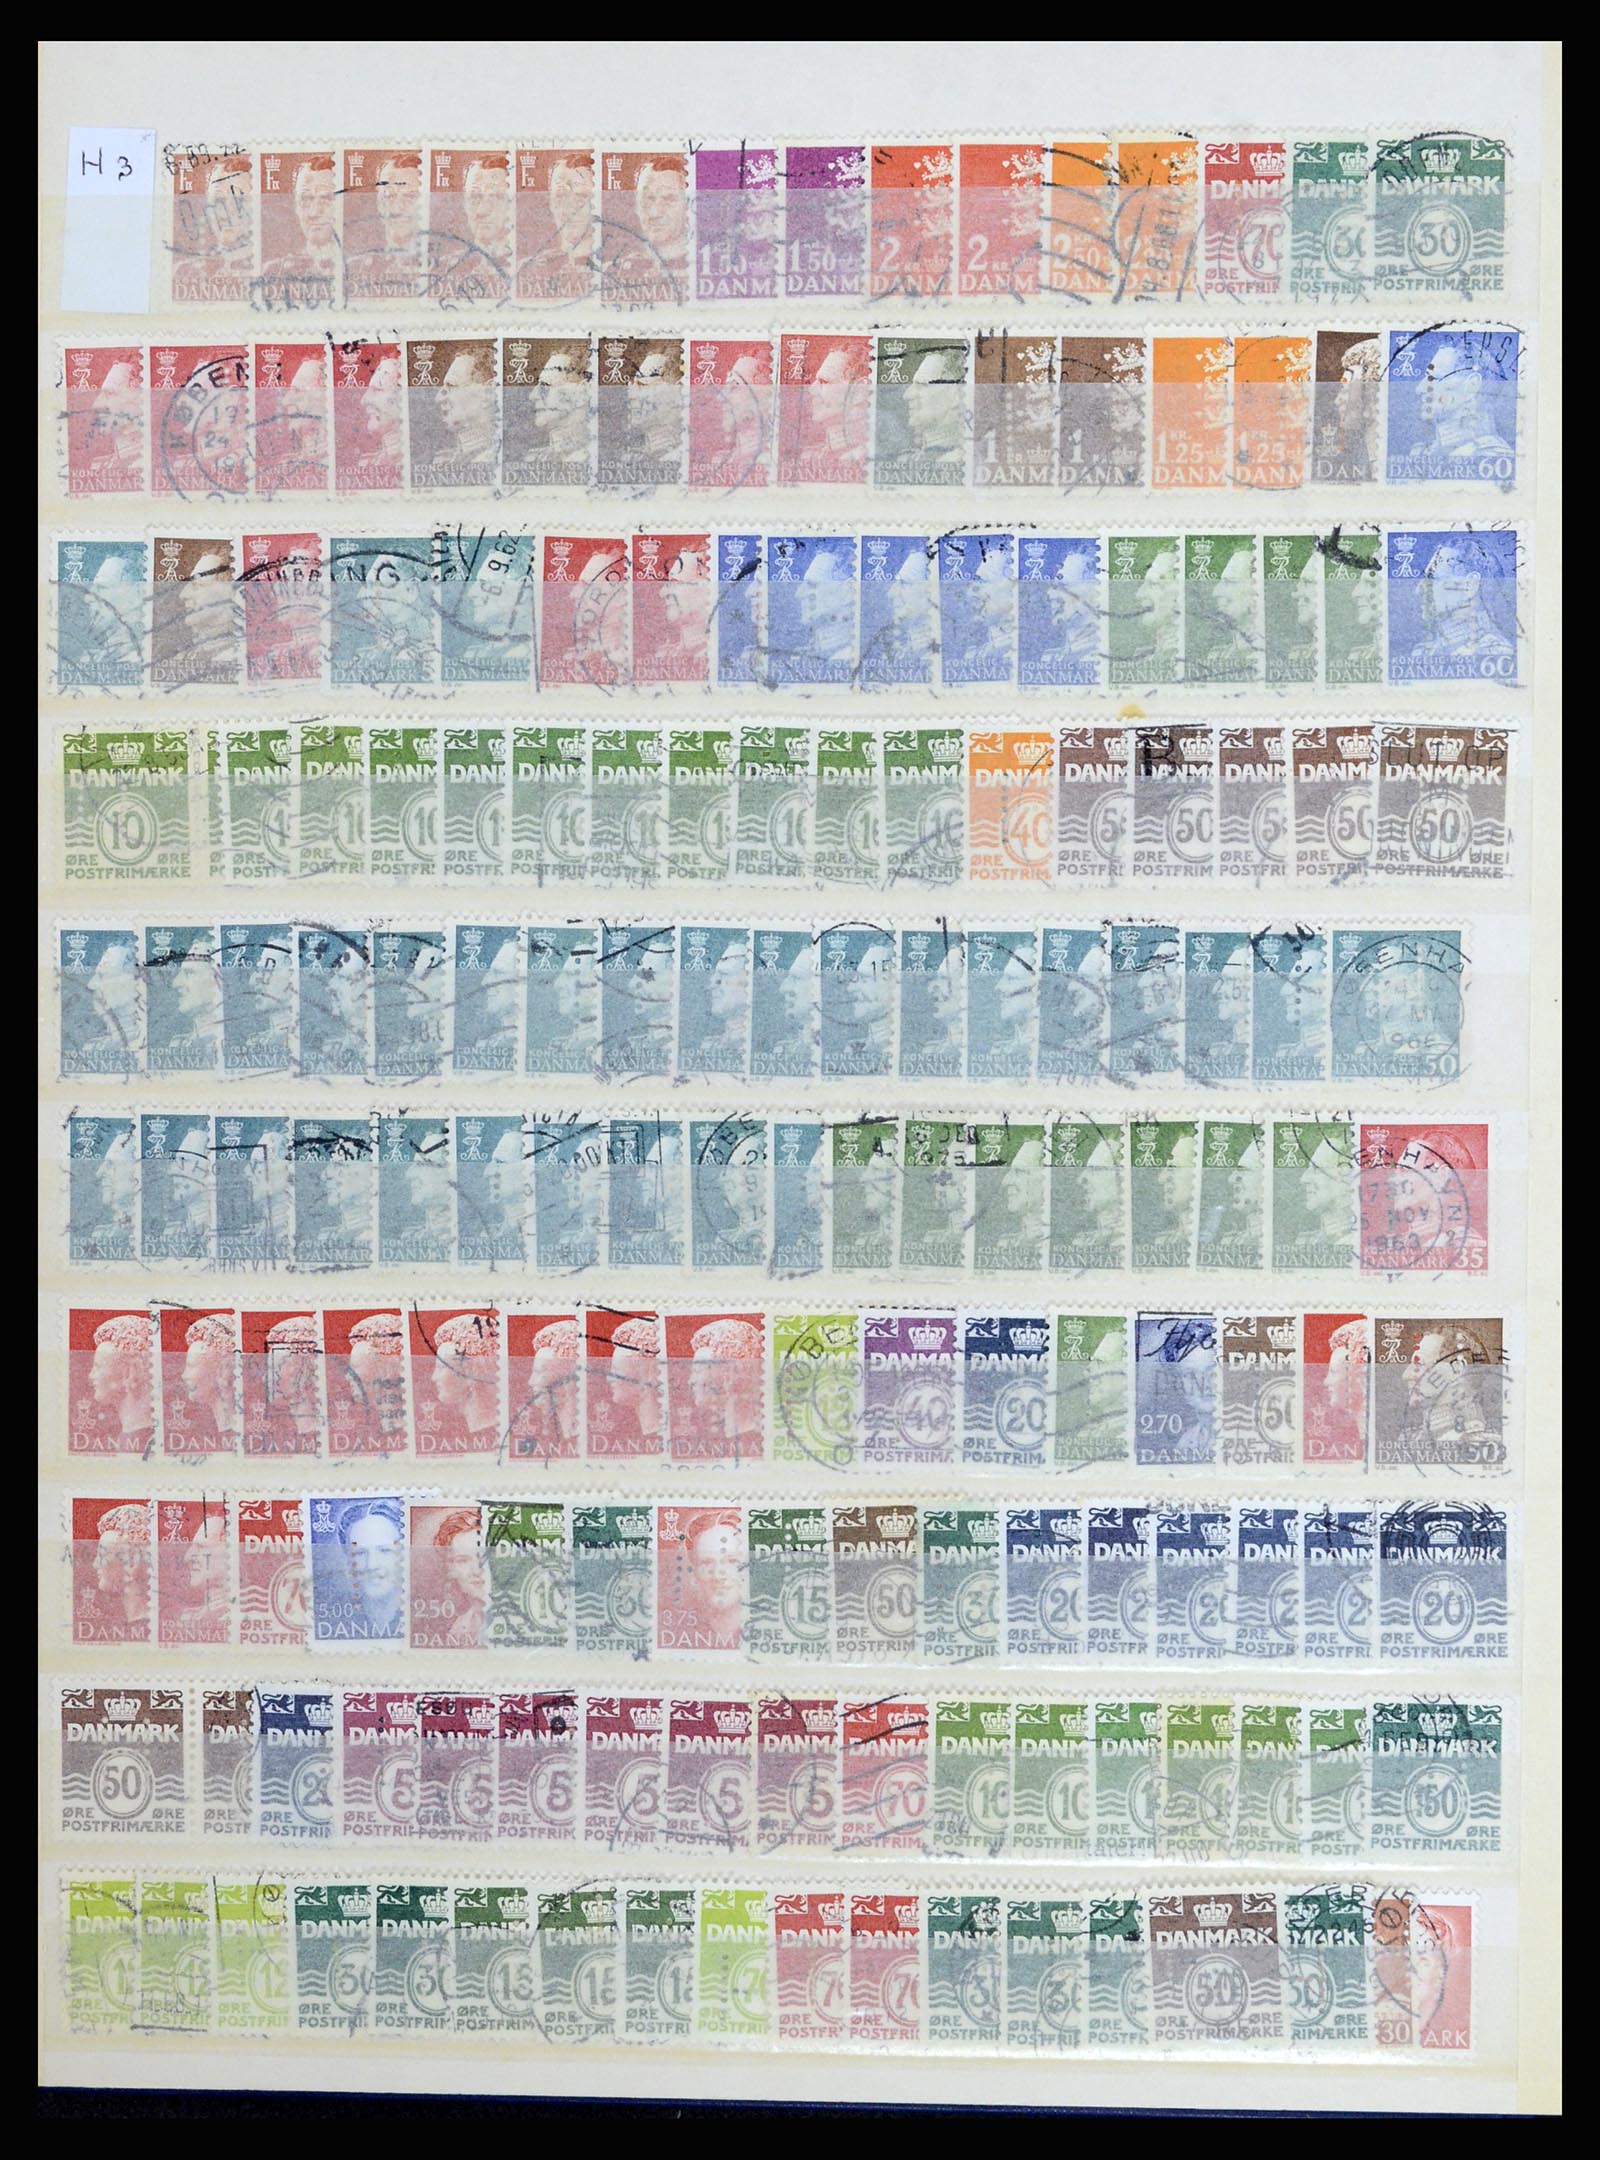 37056 049 - Stamp collection 37056 Denmark perfins.